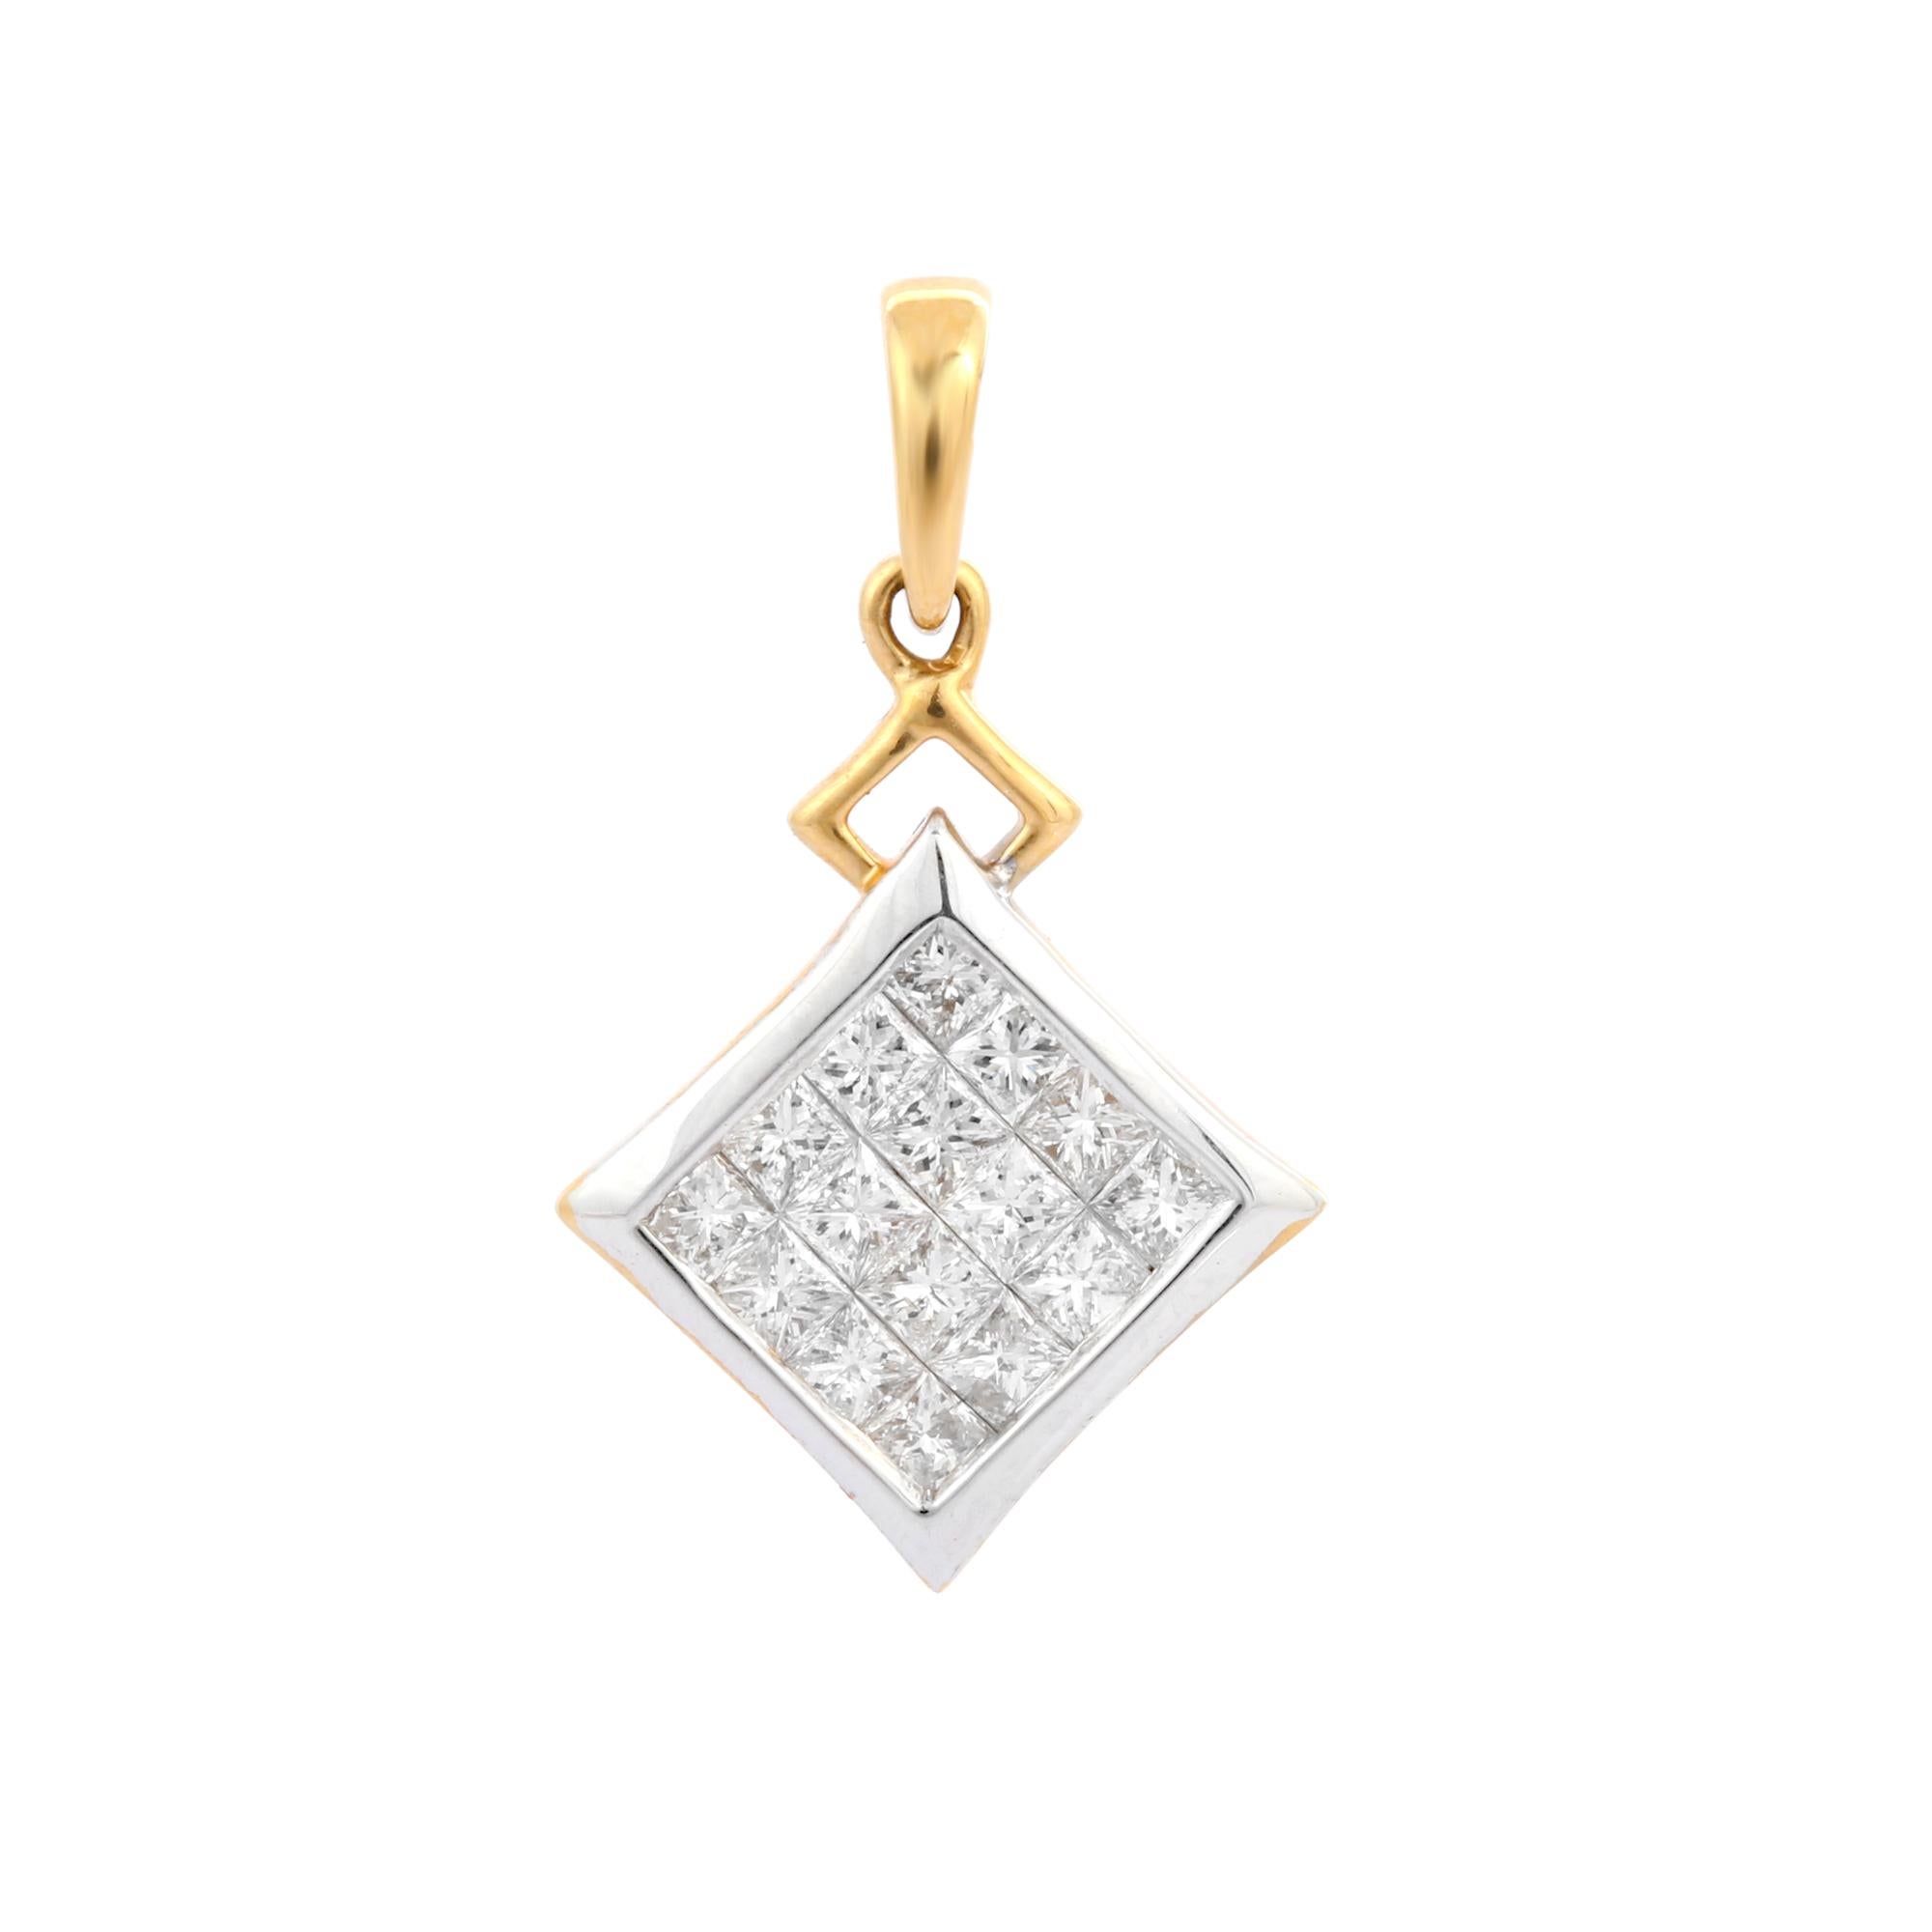 Artist Square Shape Diamond Pendant in 18K Yellow Gold For Sale